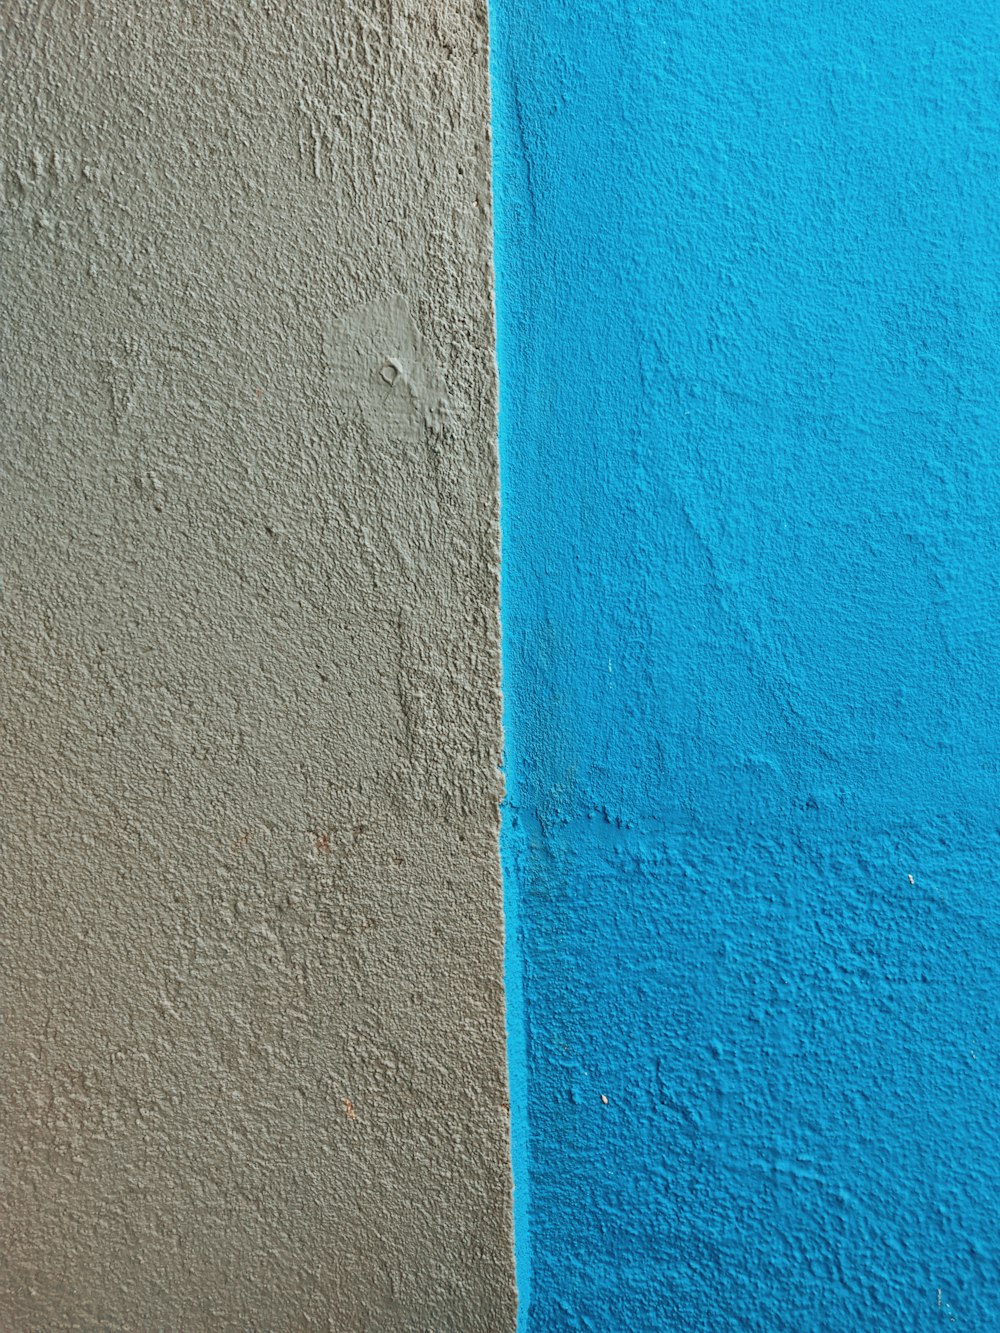 Mur peint en bleu et orange